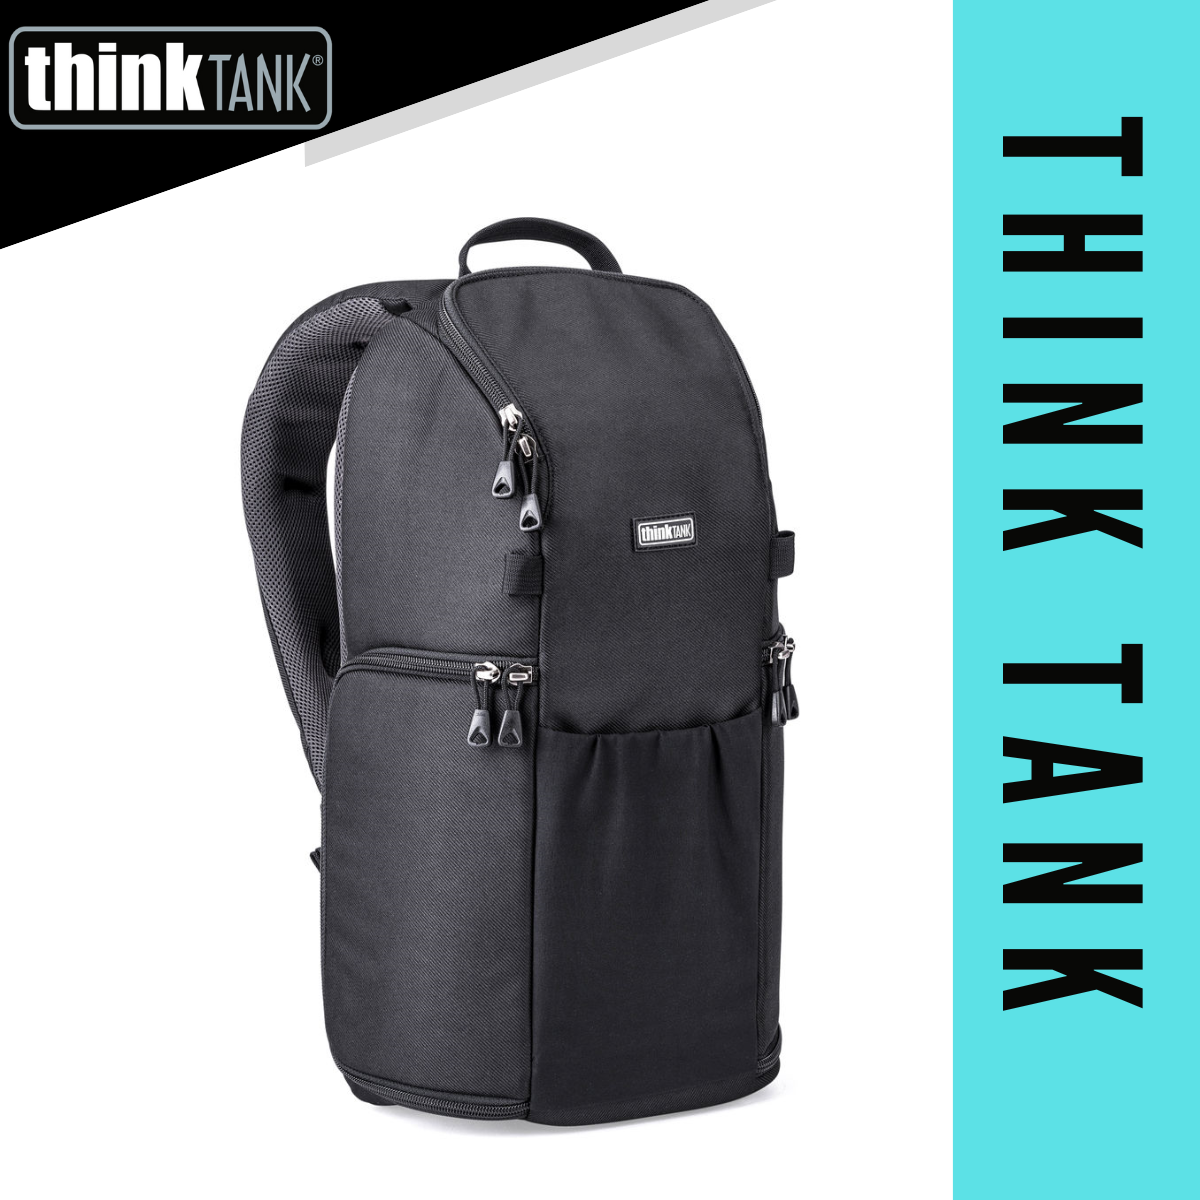 Think Tank Photo Trifecta 10-